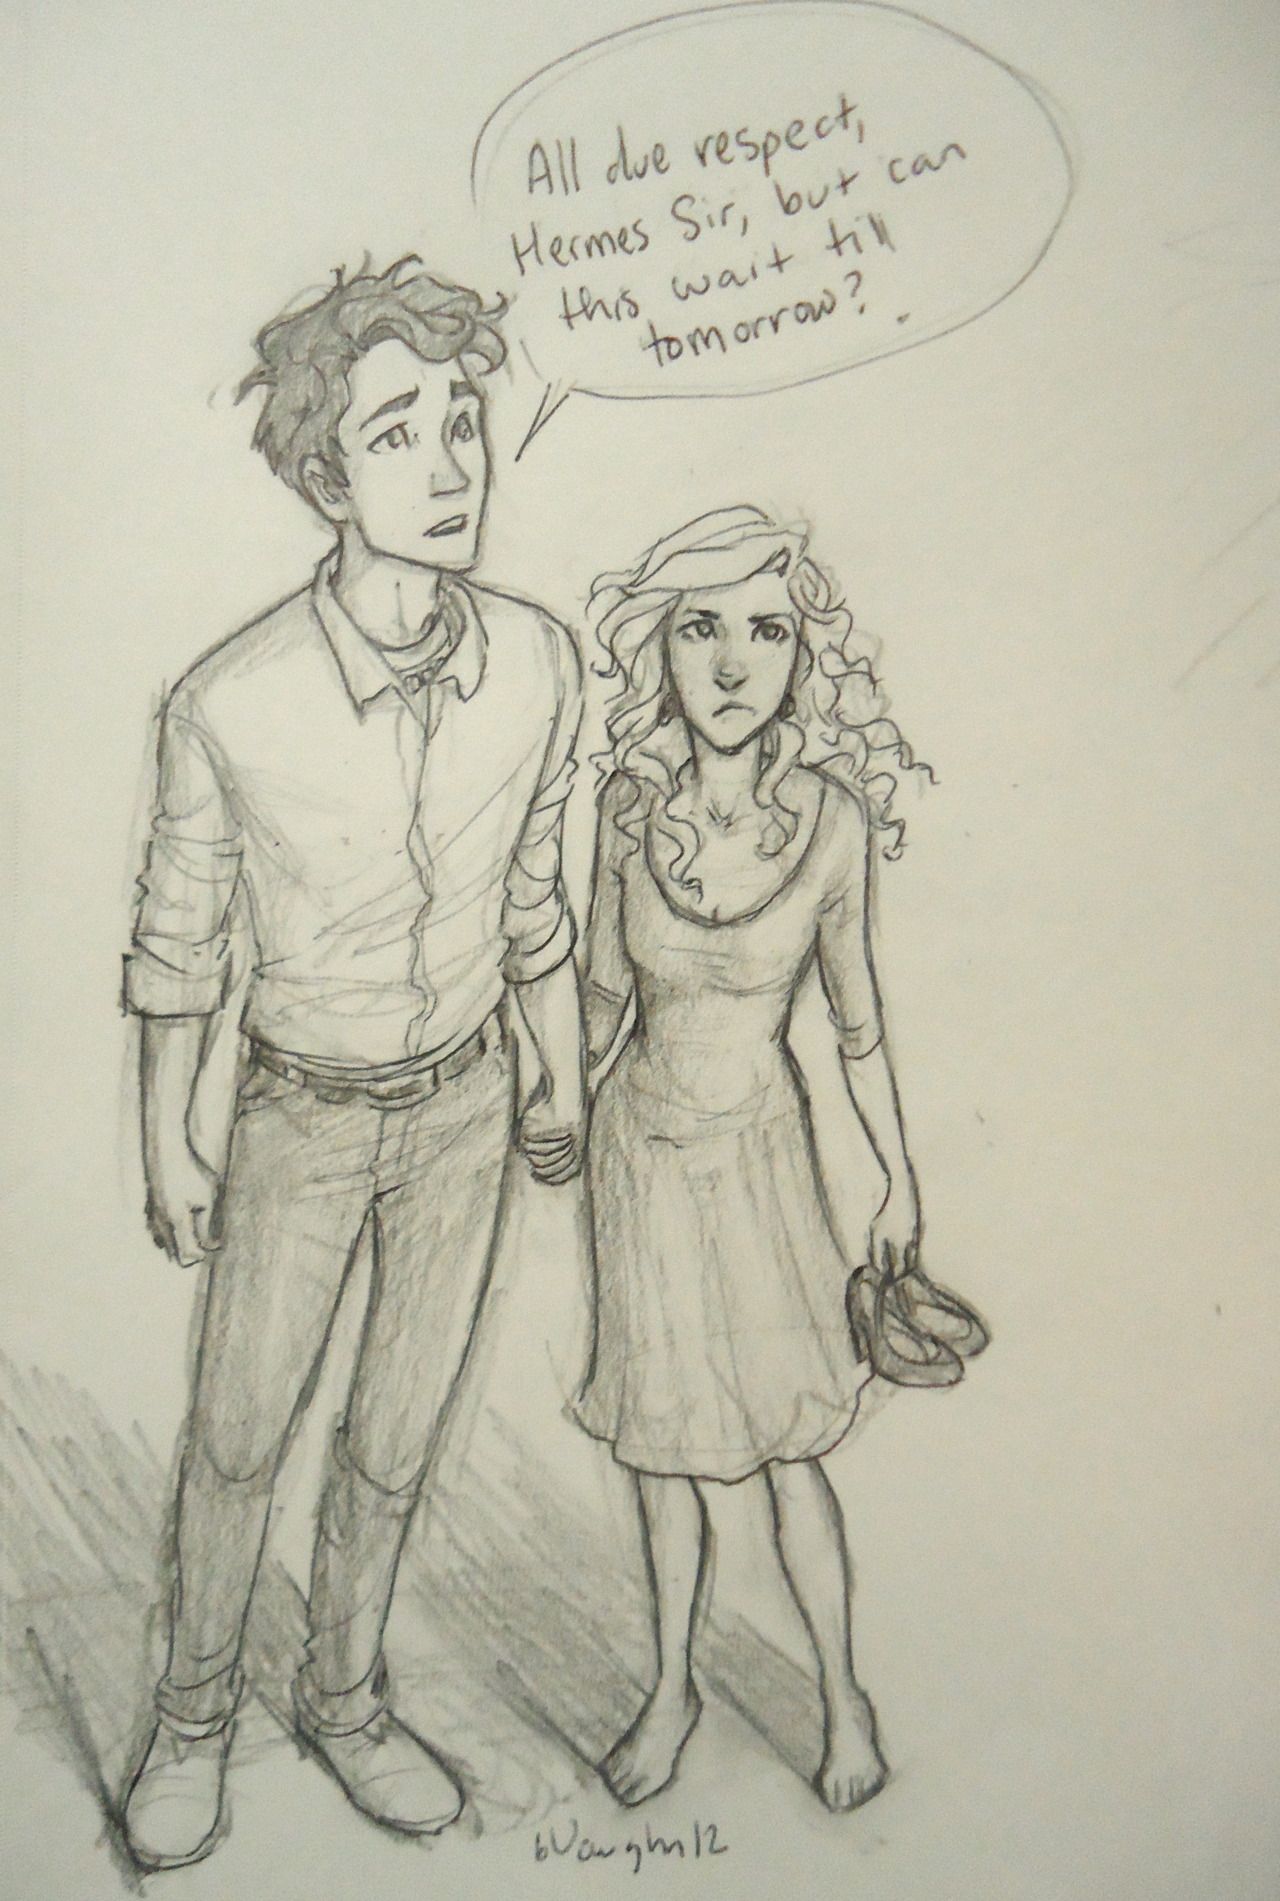 I love Percy and Annabeth